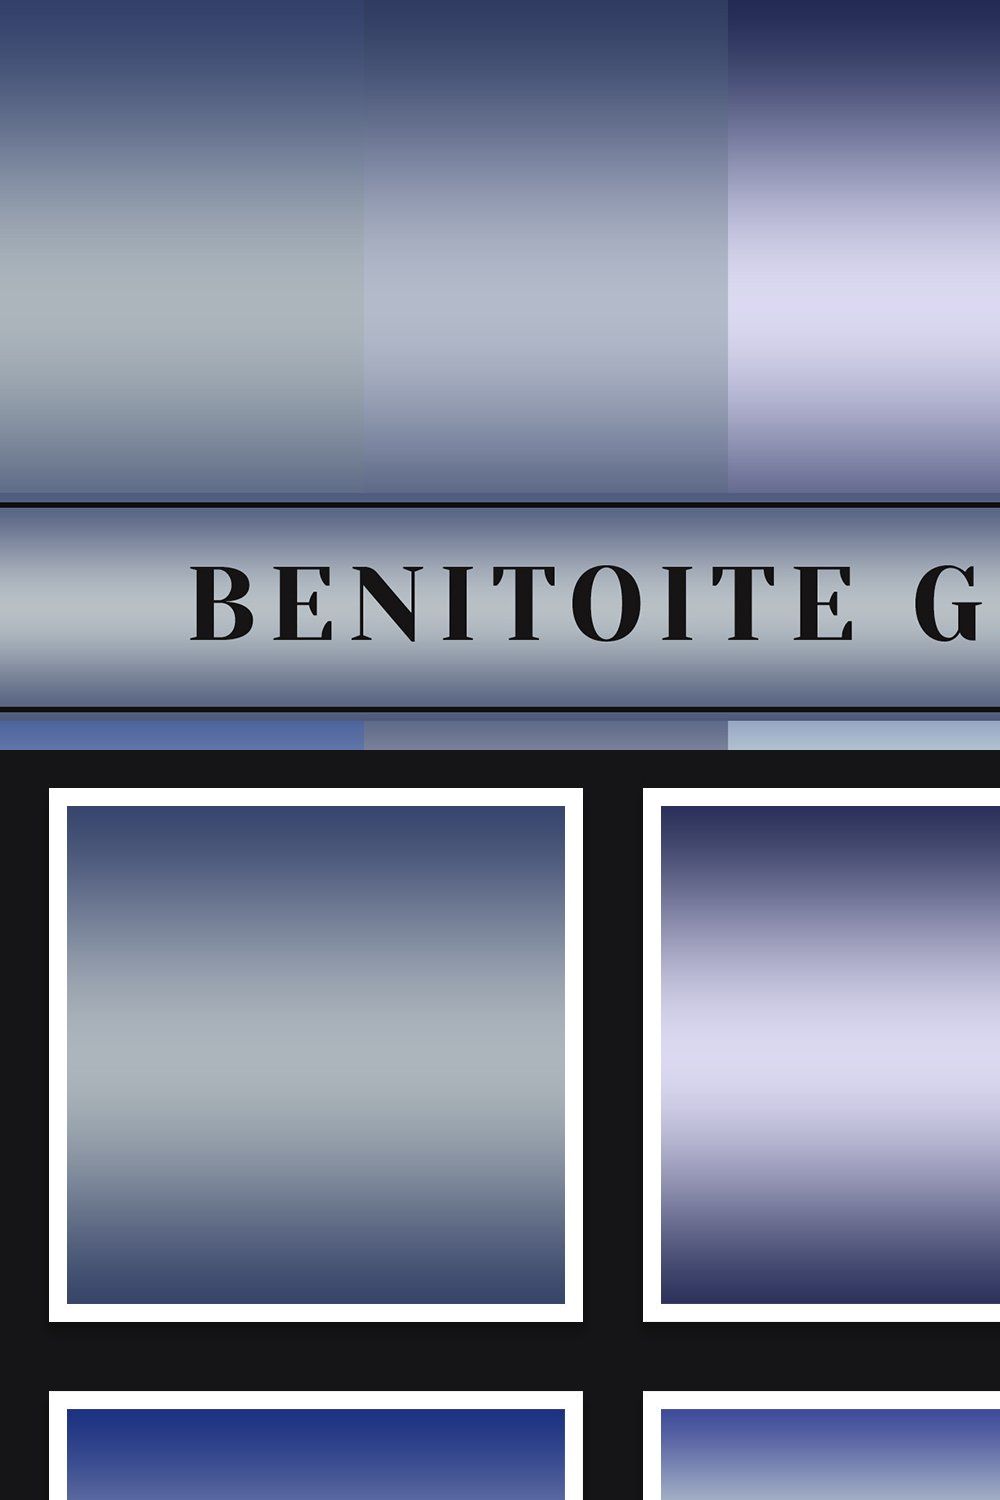 Benitoite Gradients pinterest preview image.